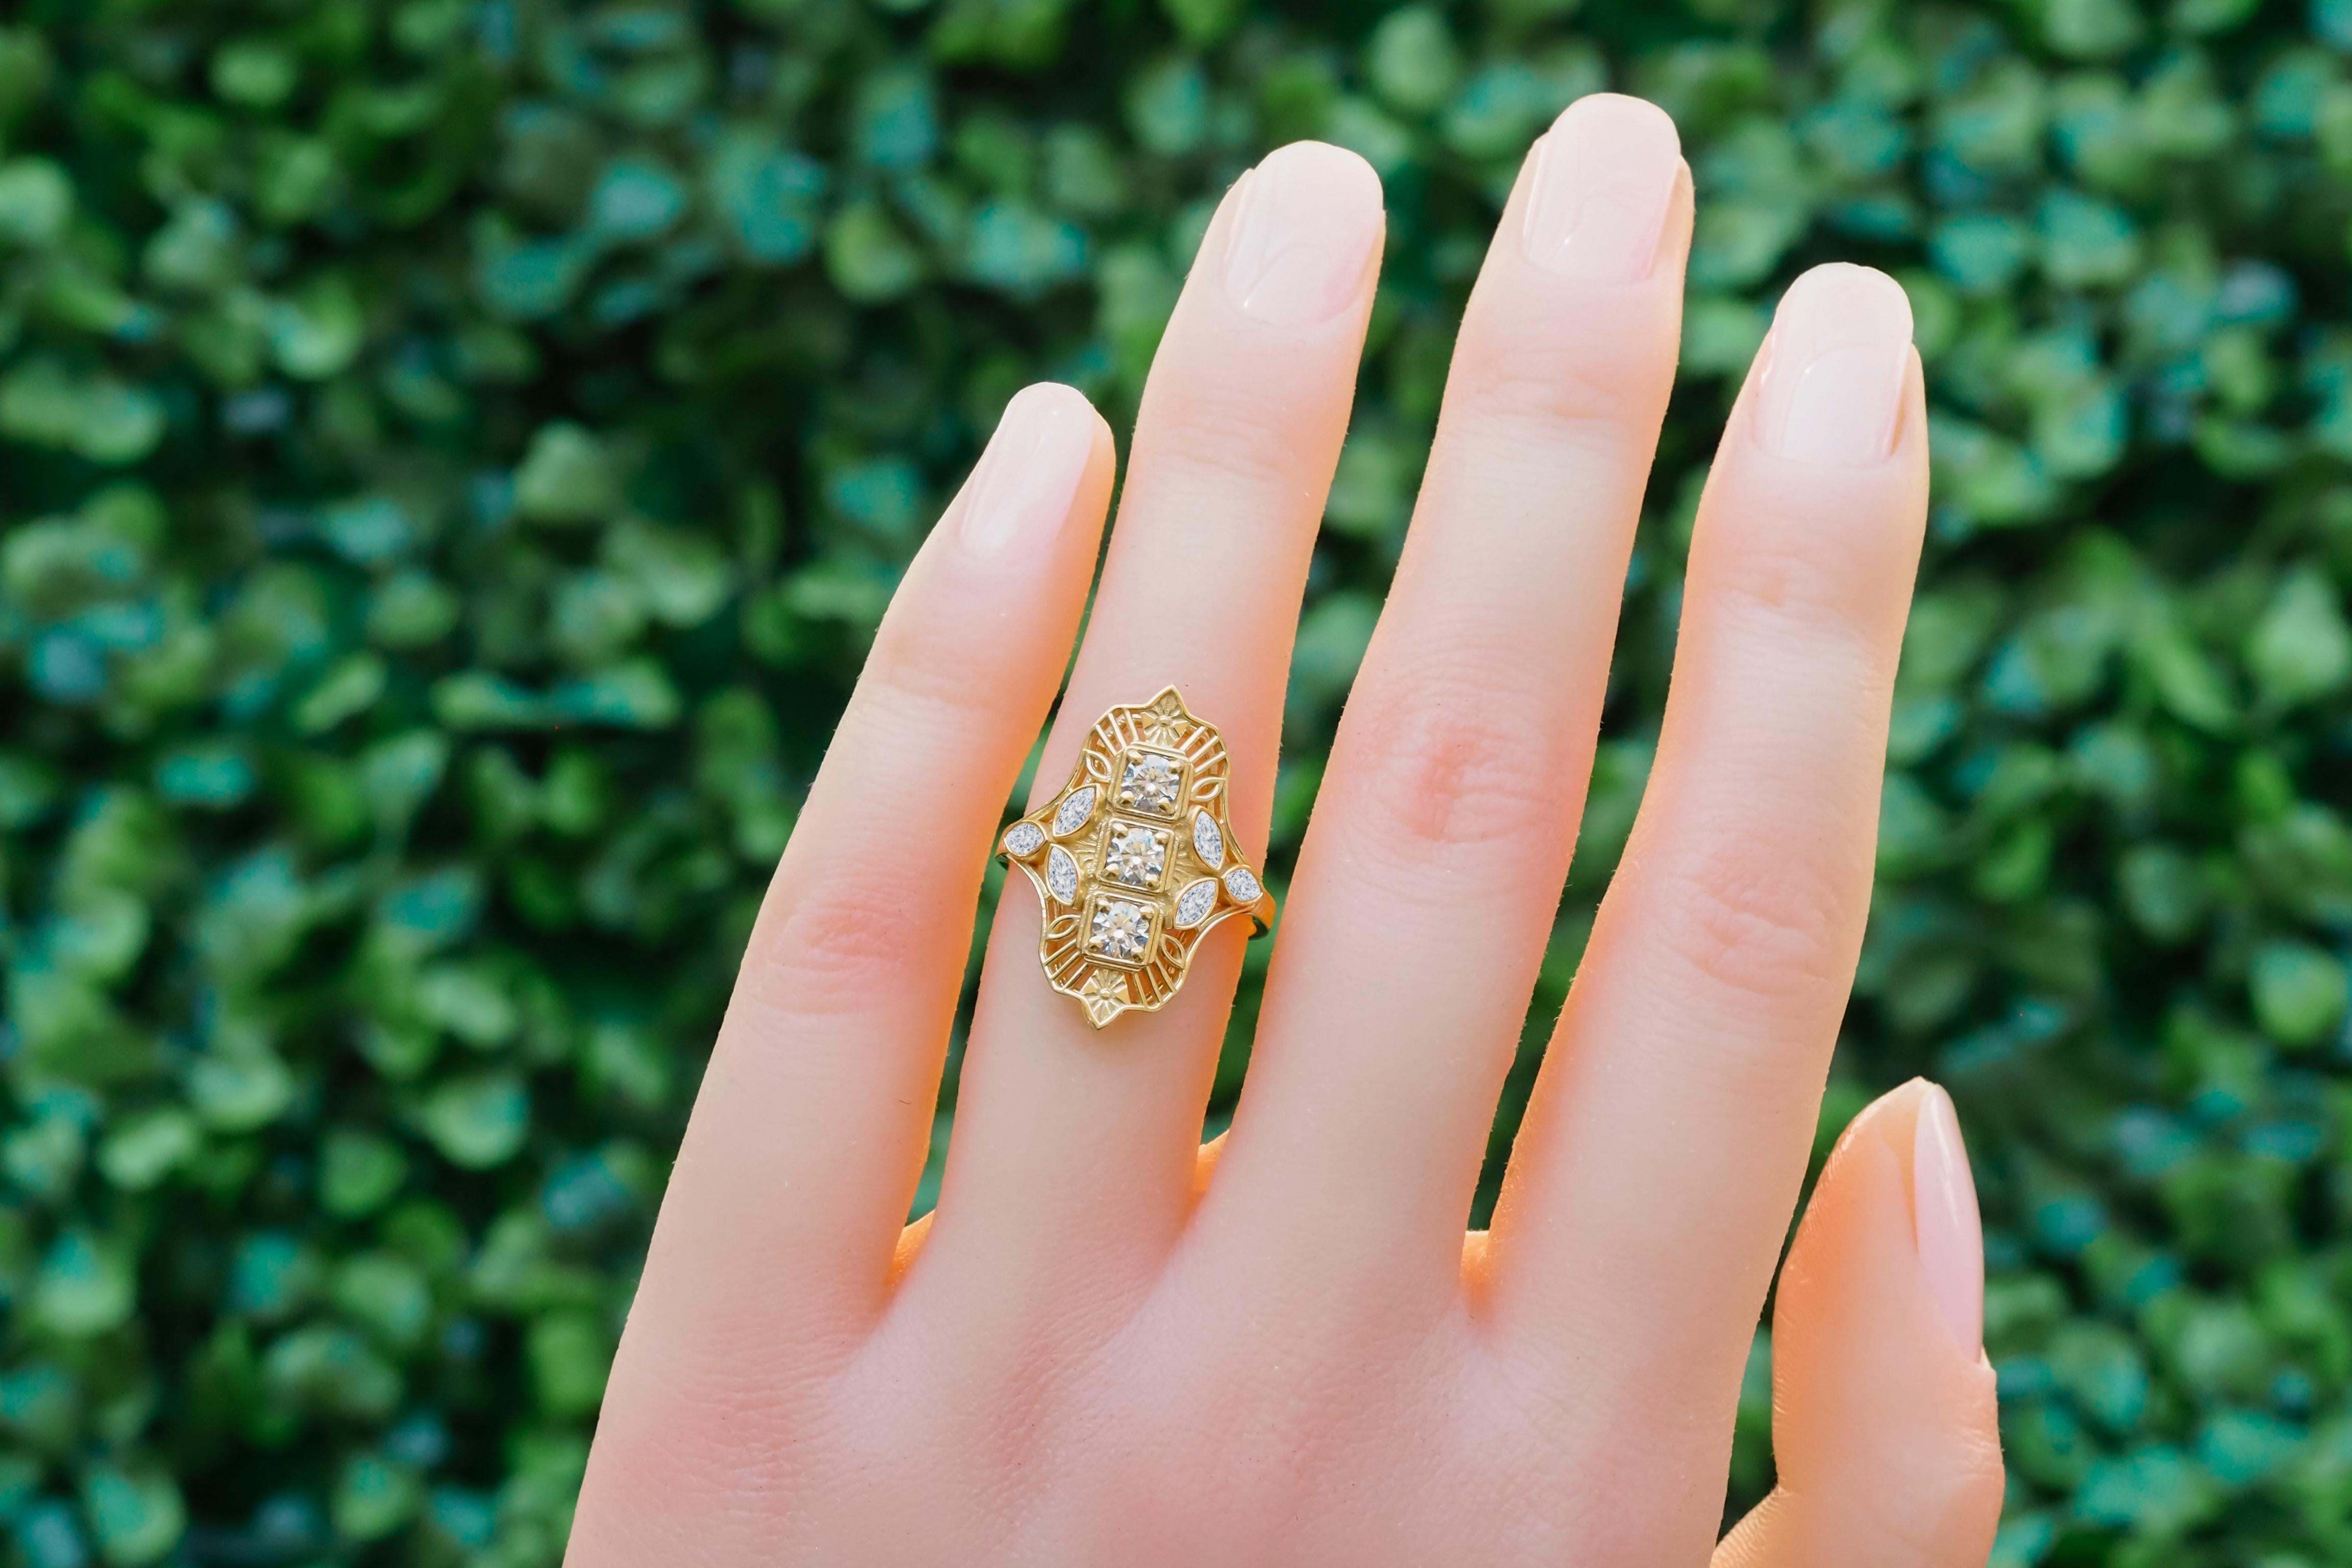 For Sale:  Vintage style moissanite 14k gold engagement ring. 2